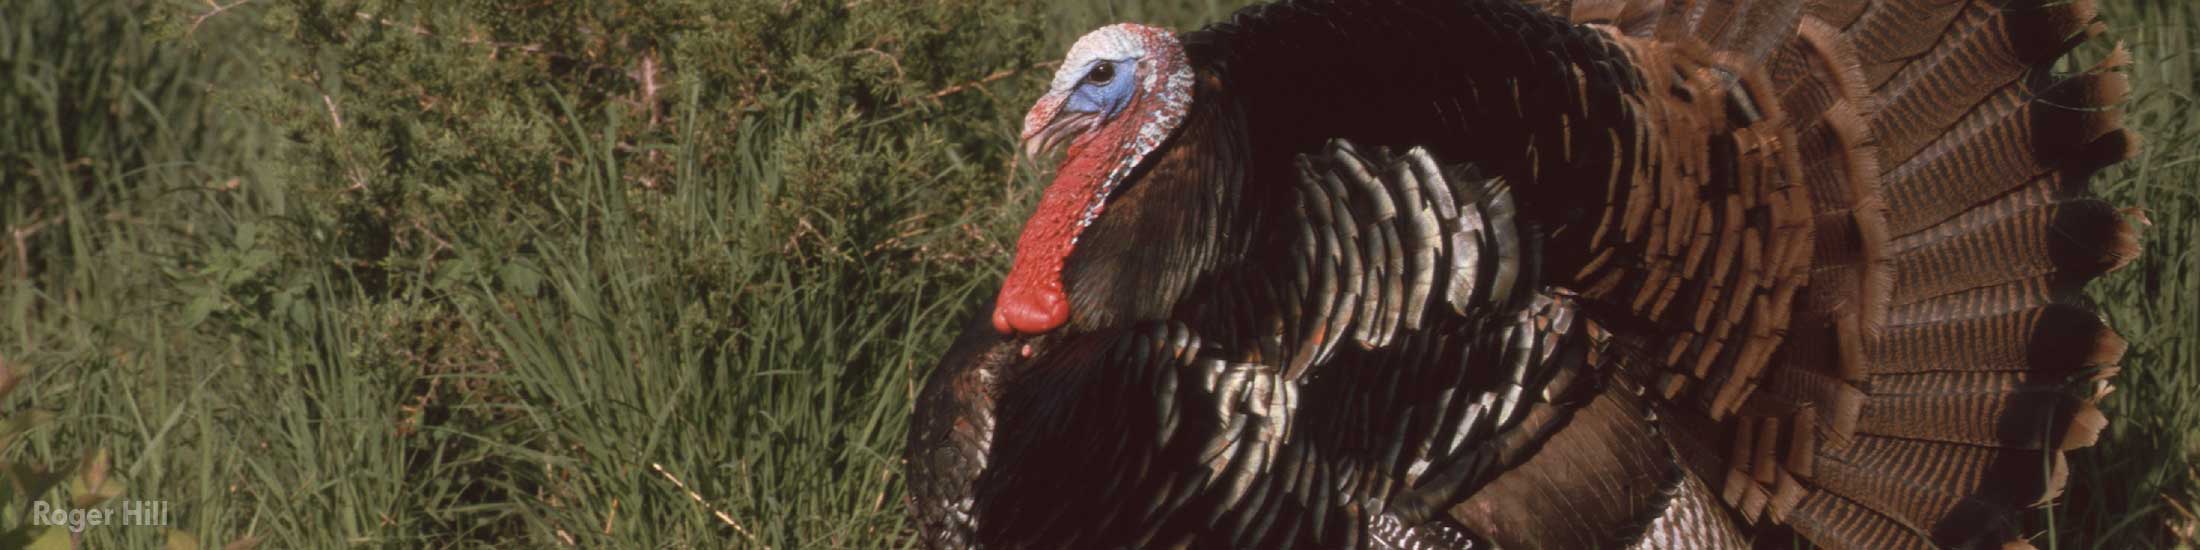 Wild Turkey in Iowa